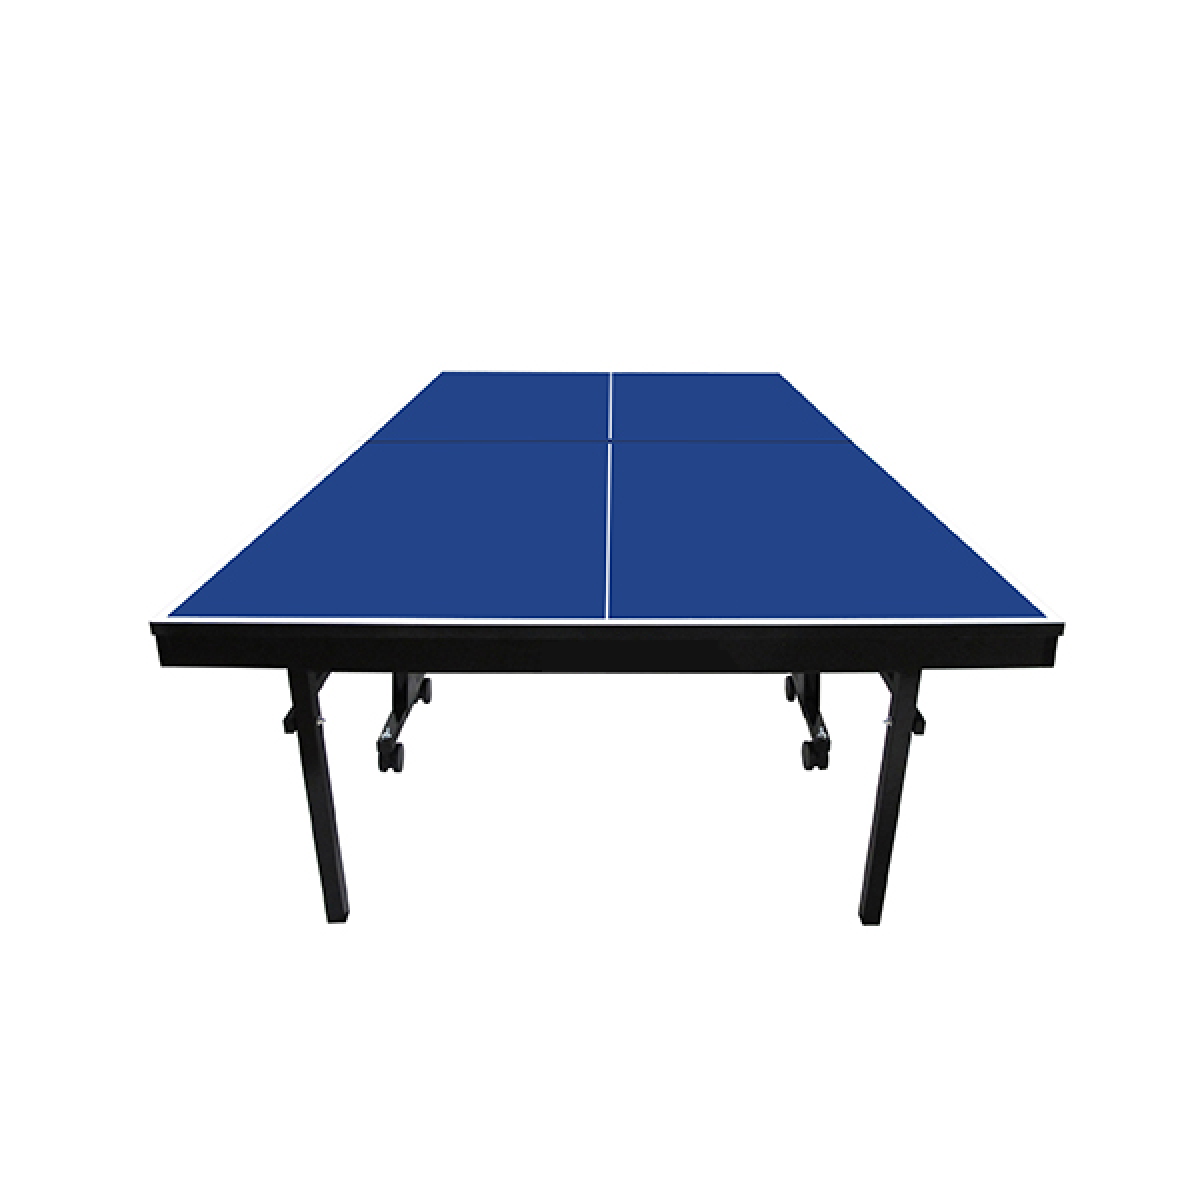 Mesa de Ping Pong Klopf Dobrável - Brinkpell